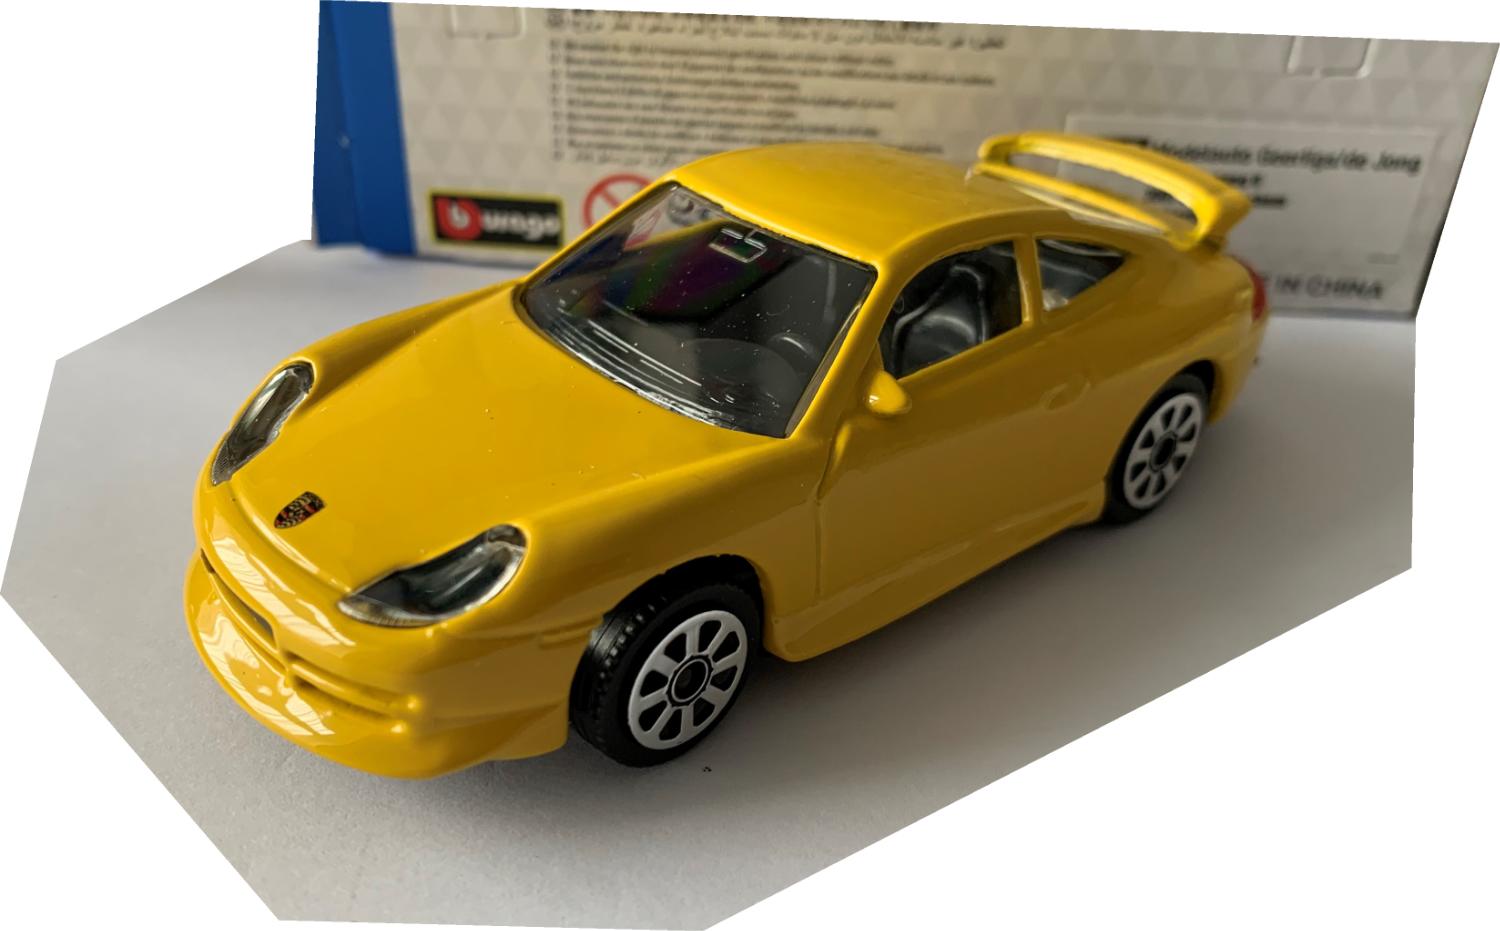 Porsche 911 Carrera in yellow 1:43 scale model from Bburago